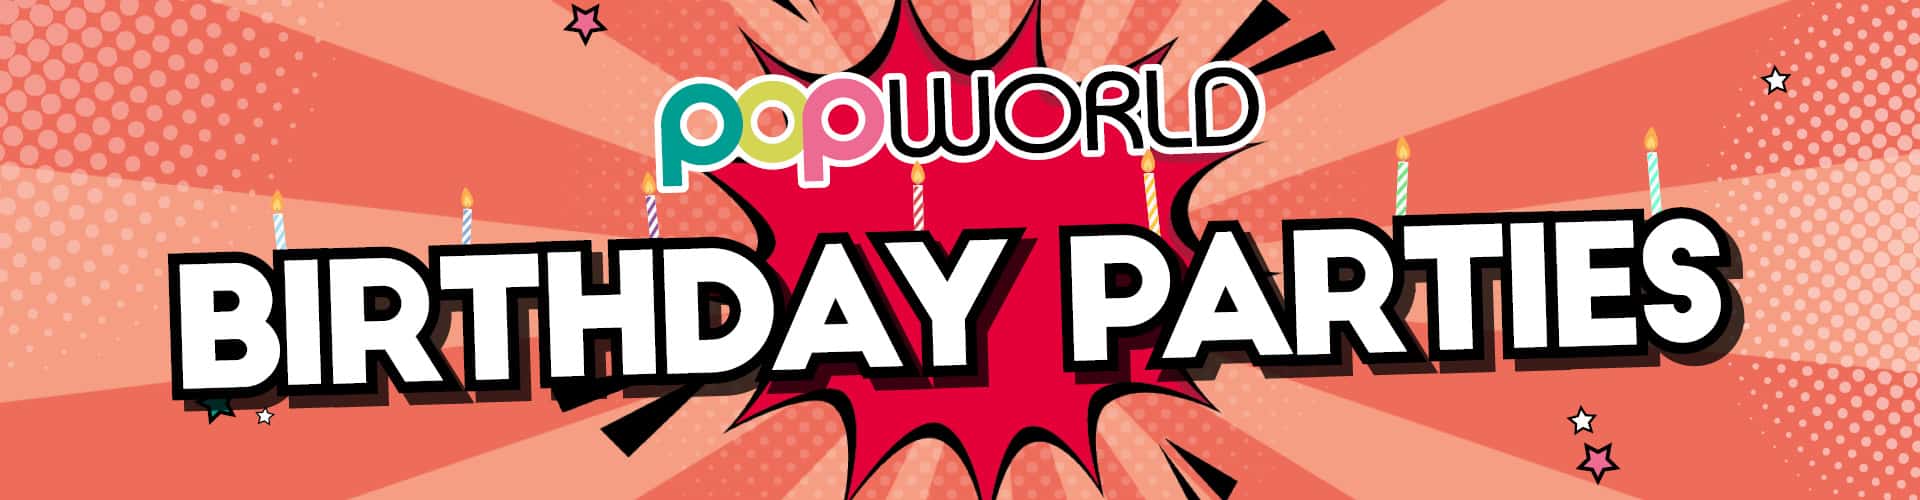 Celebrate your Birthday at Popworld Leeds